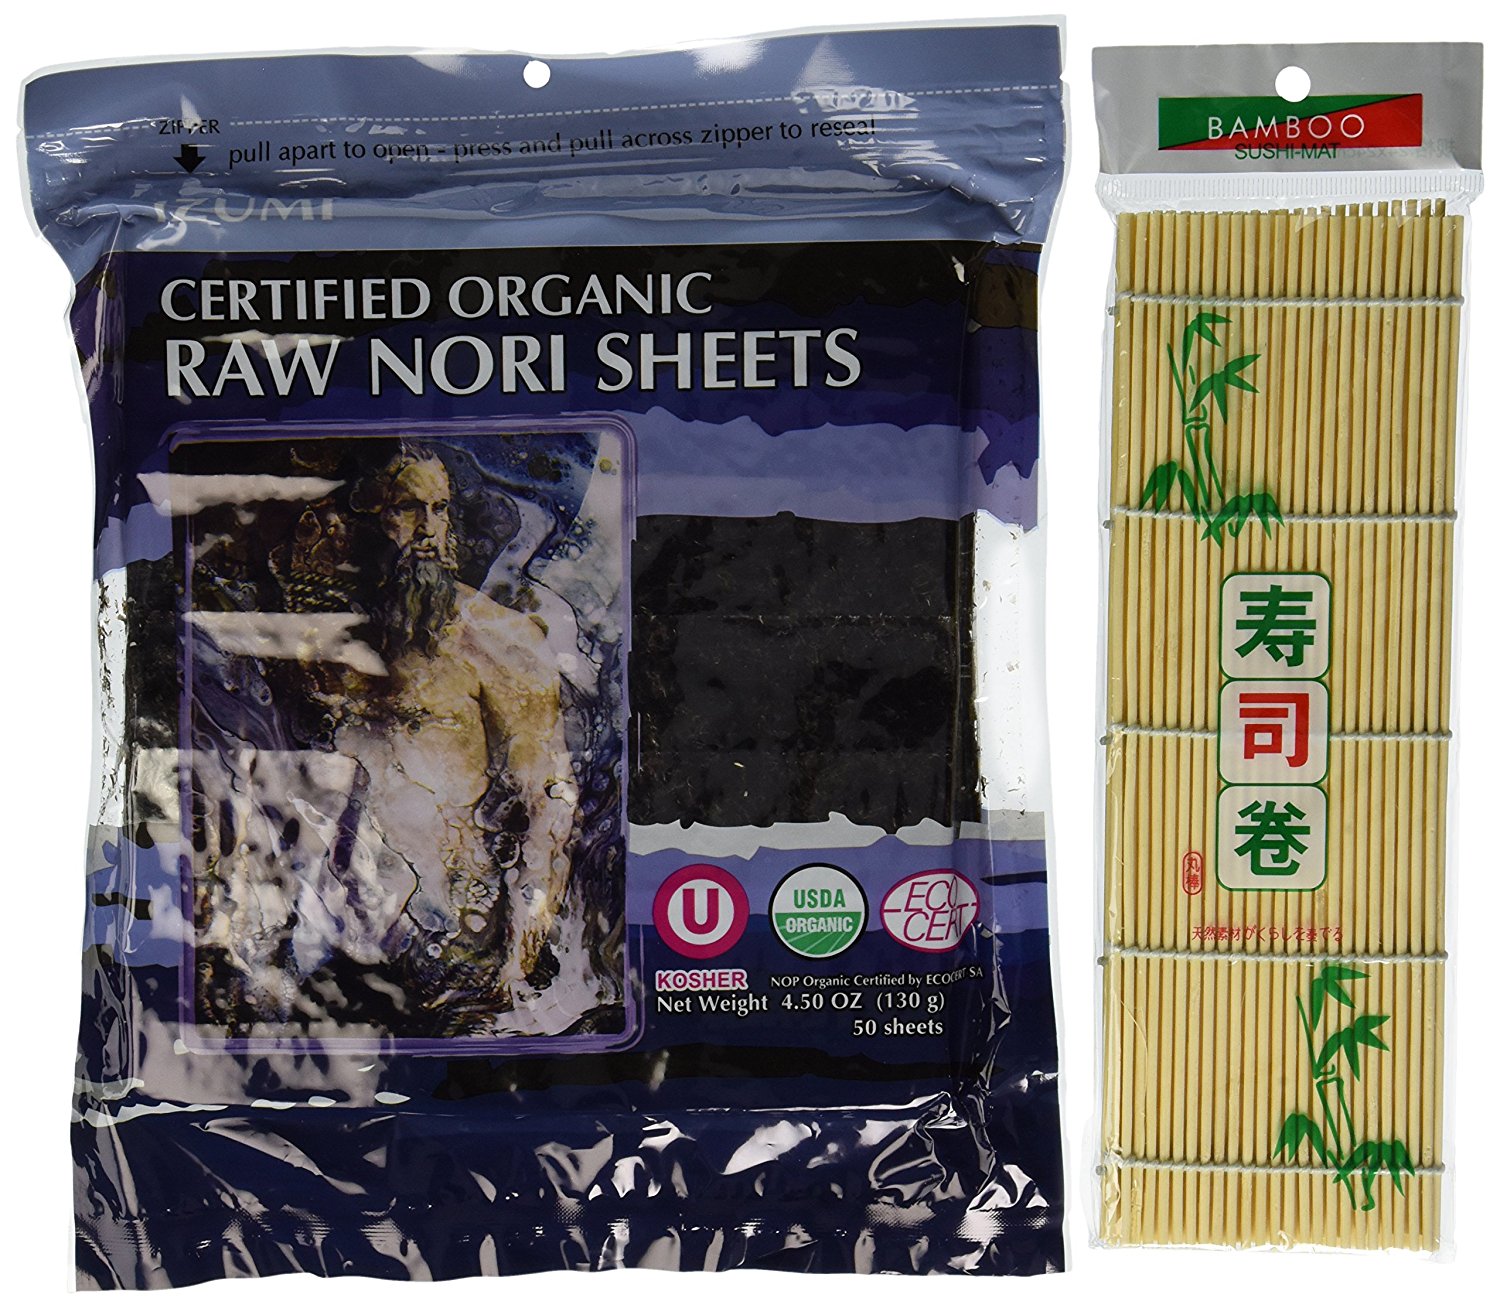 Raw Nori Sheets